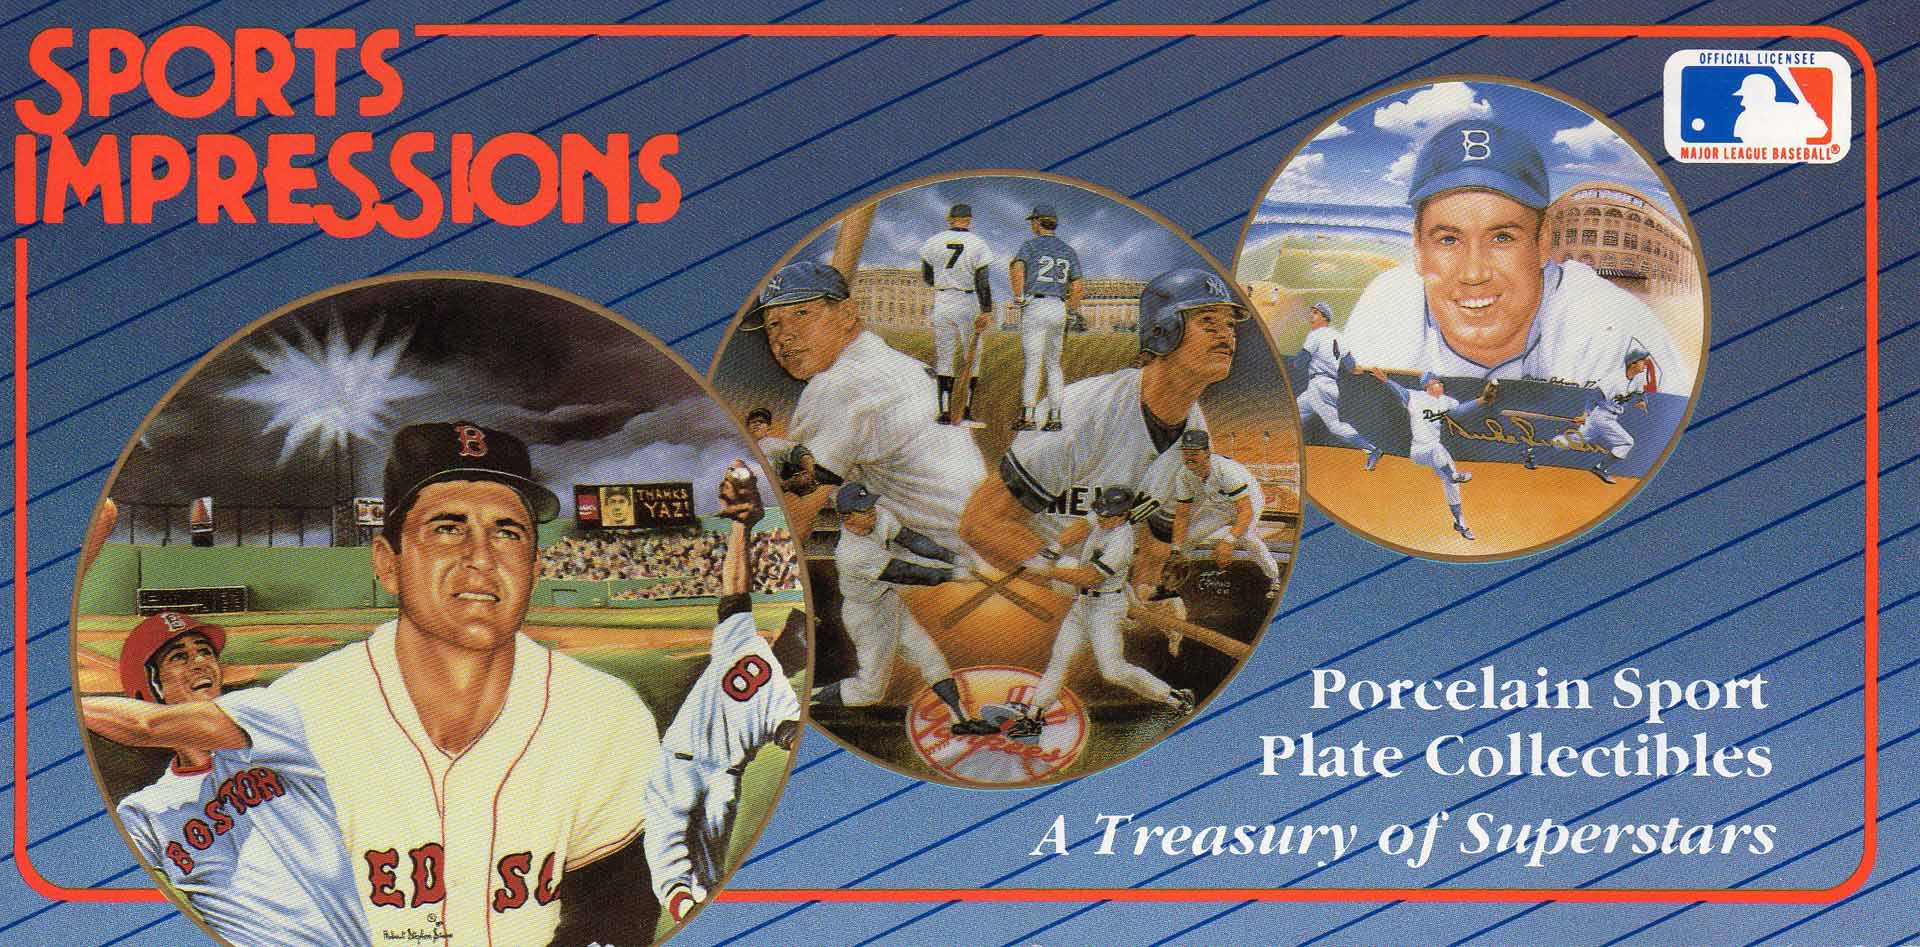 1989 sports impressions